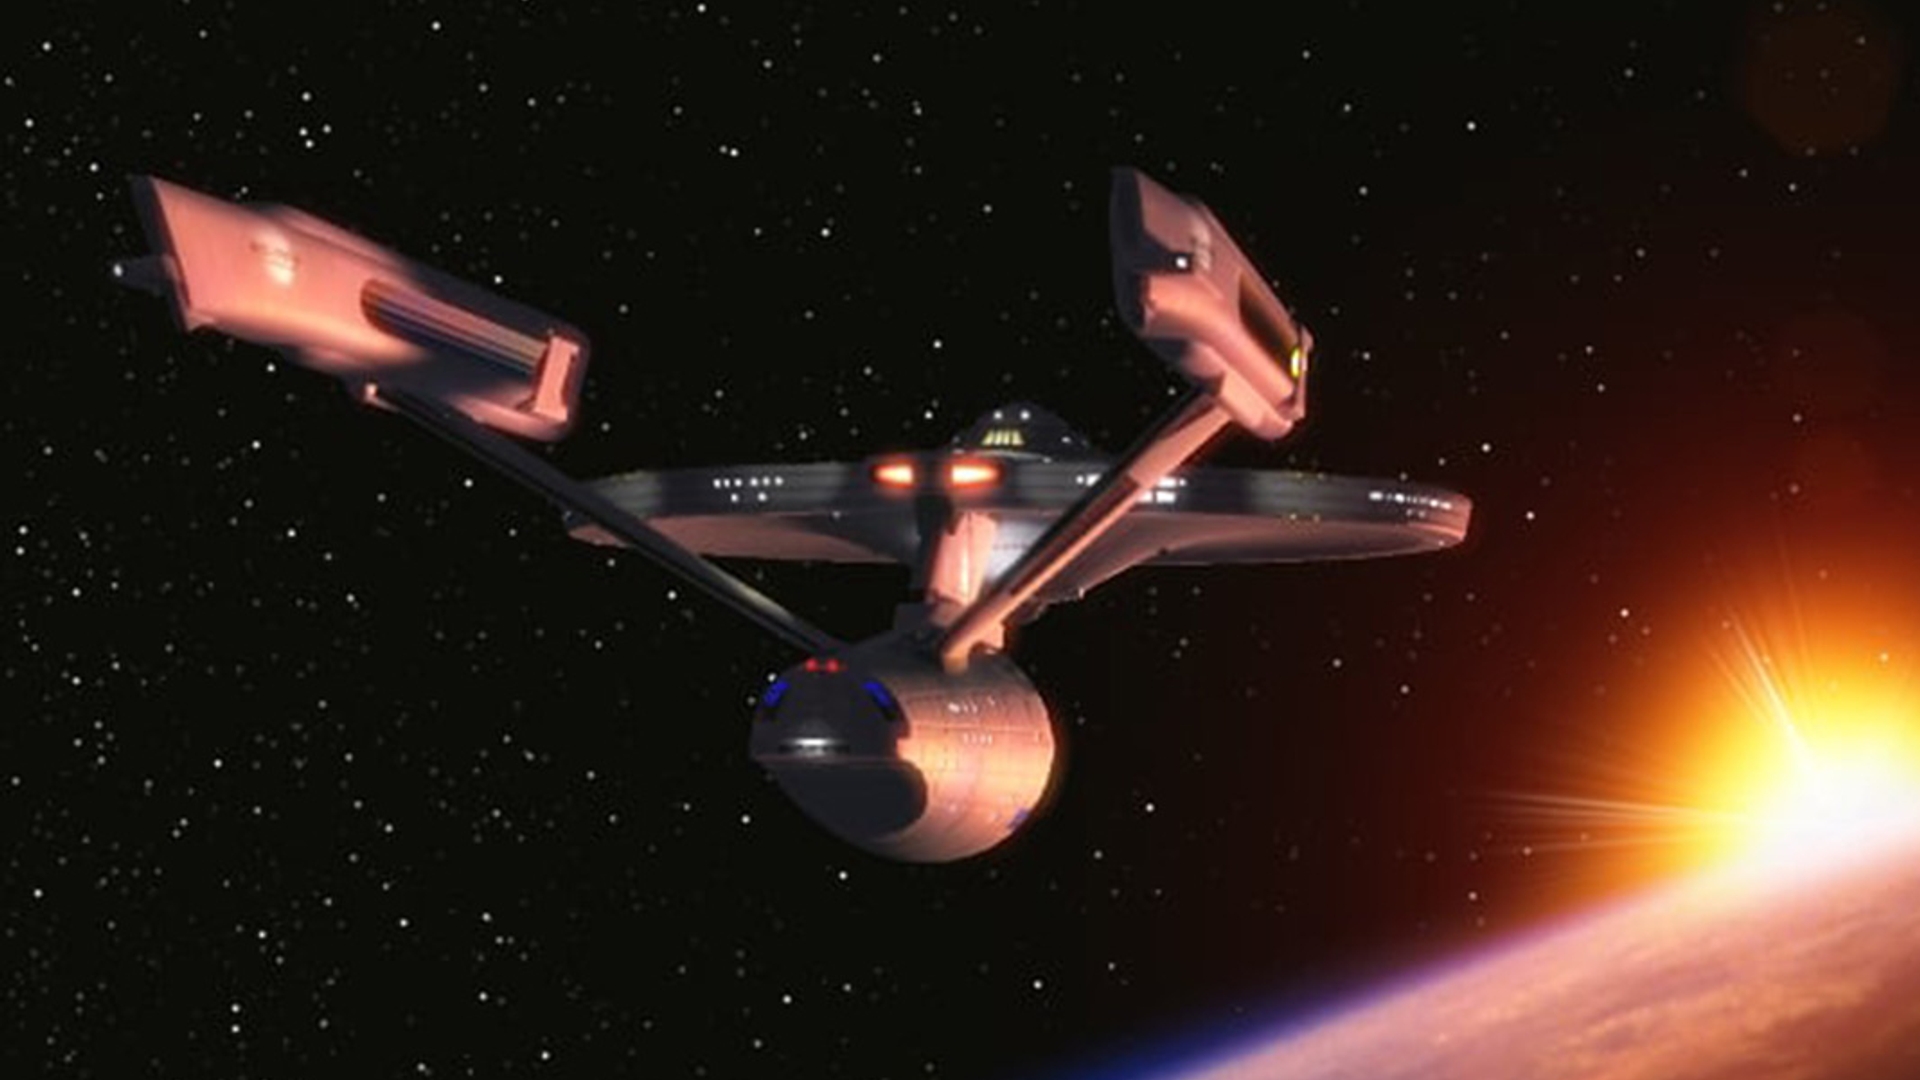 star-trek-discovery-may-be-set-just-before-the-original-series-exploring-klingon-confl-1077203